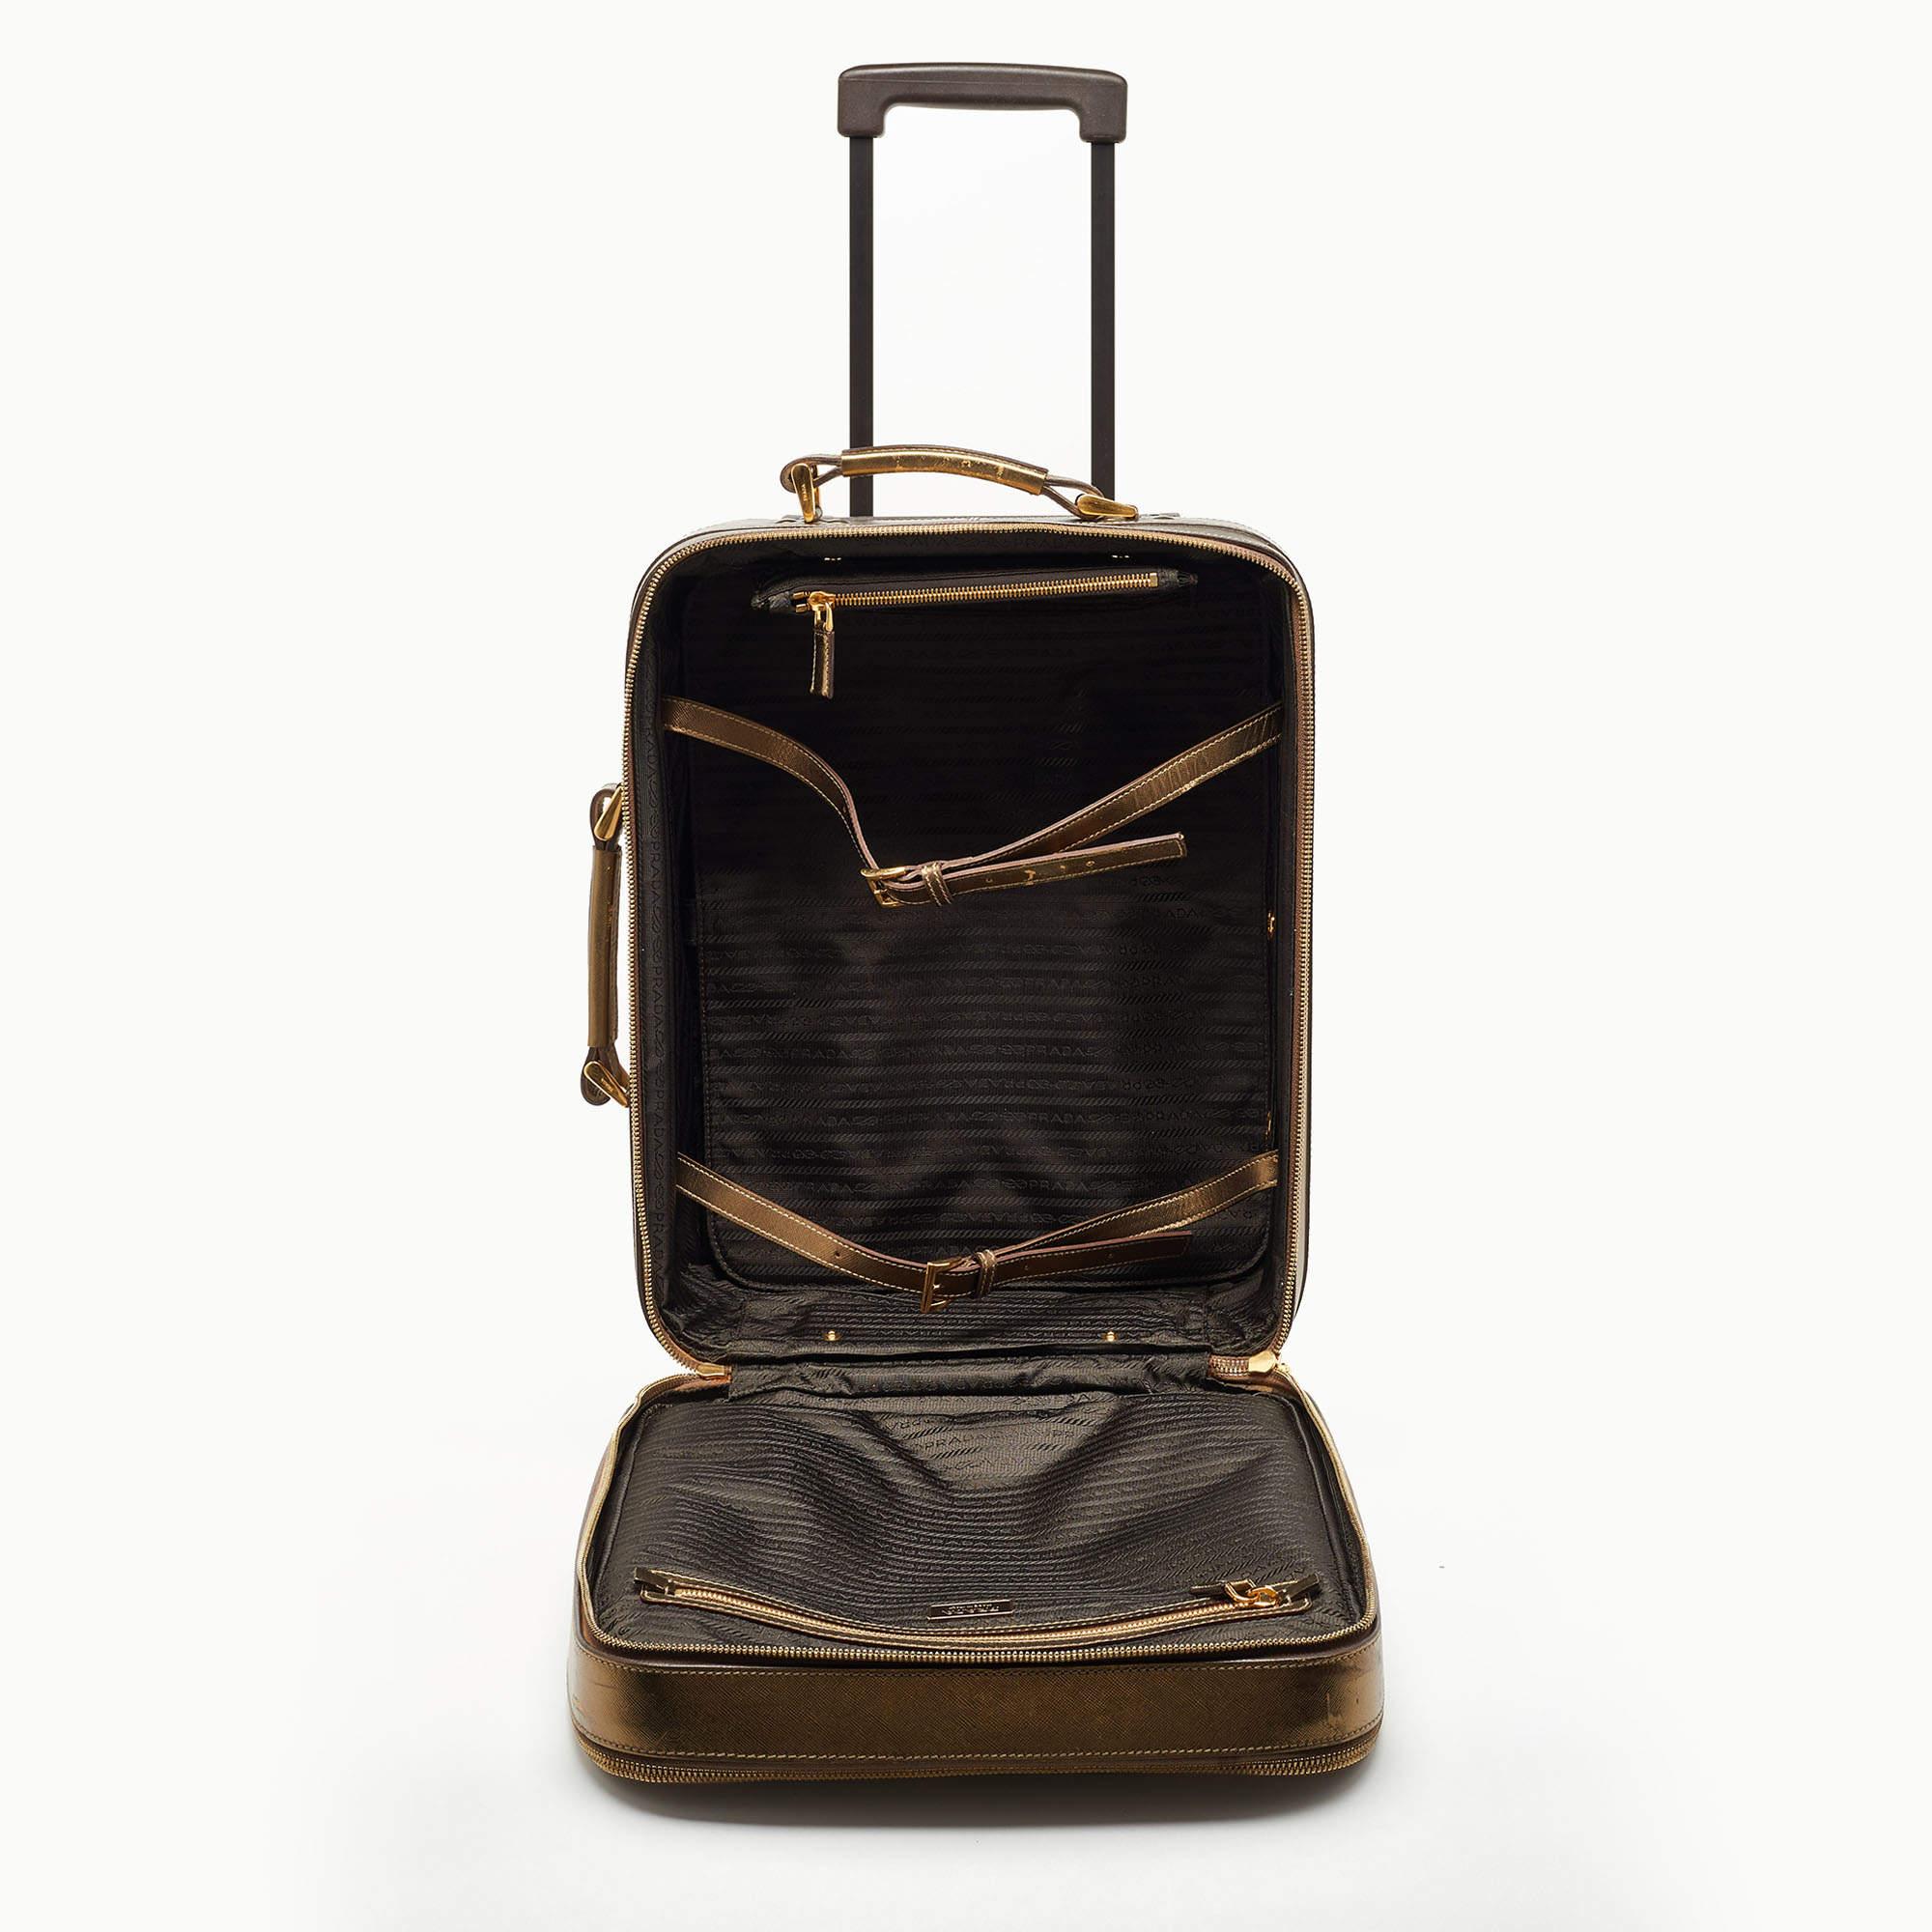 Prada Metallic Gold Saffiano Leather Travel Rolling Trolley Luggage 1